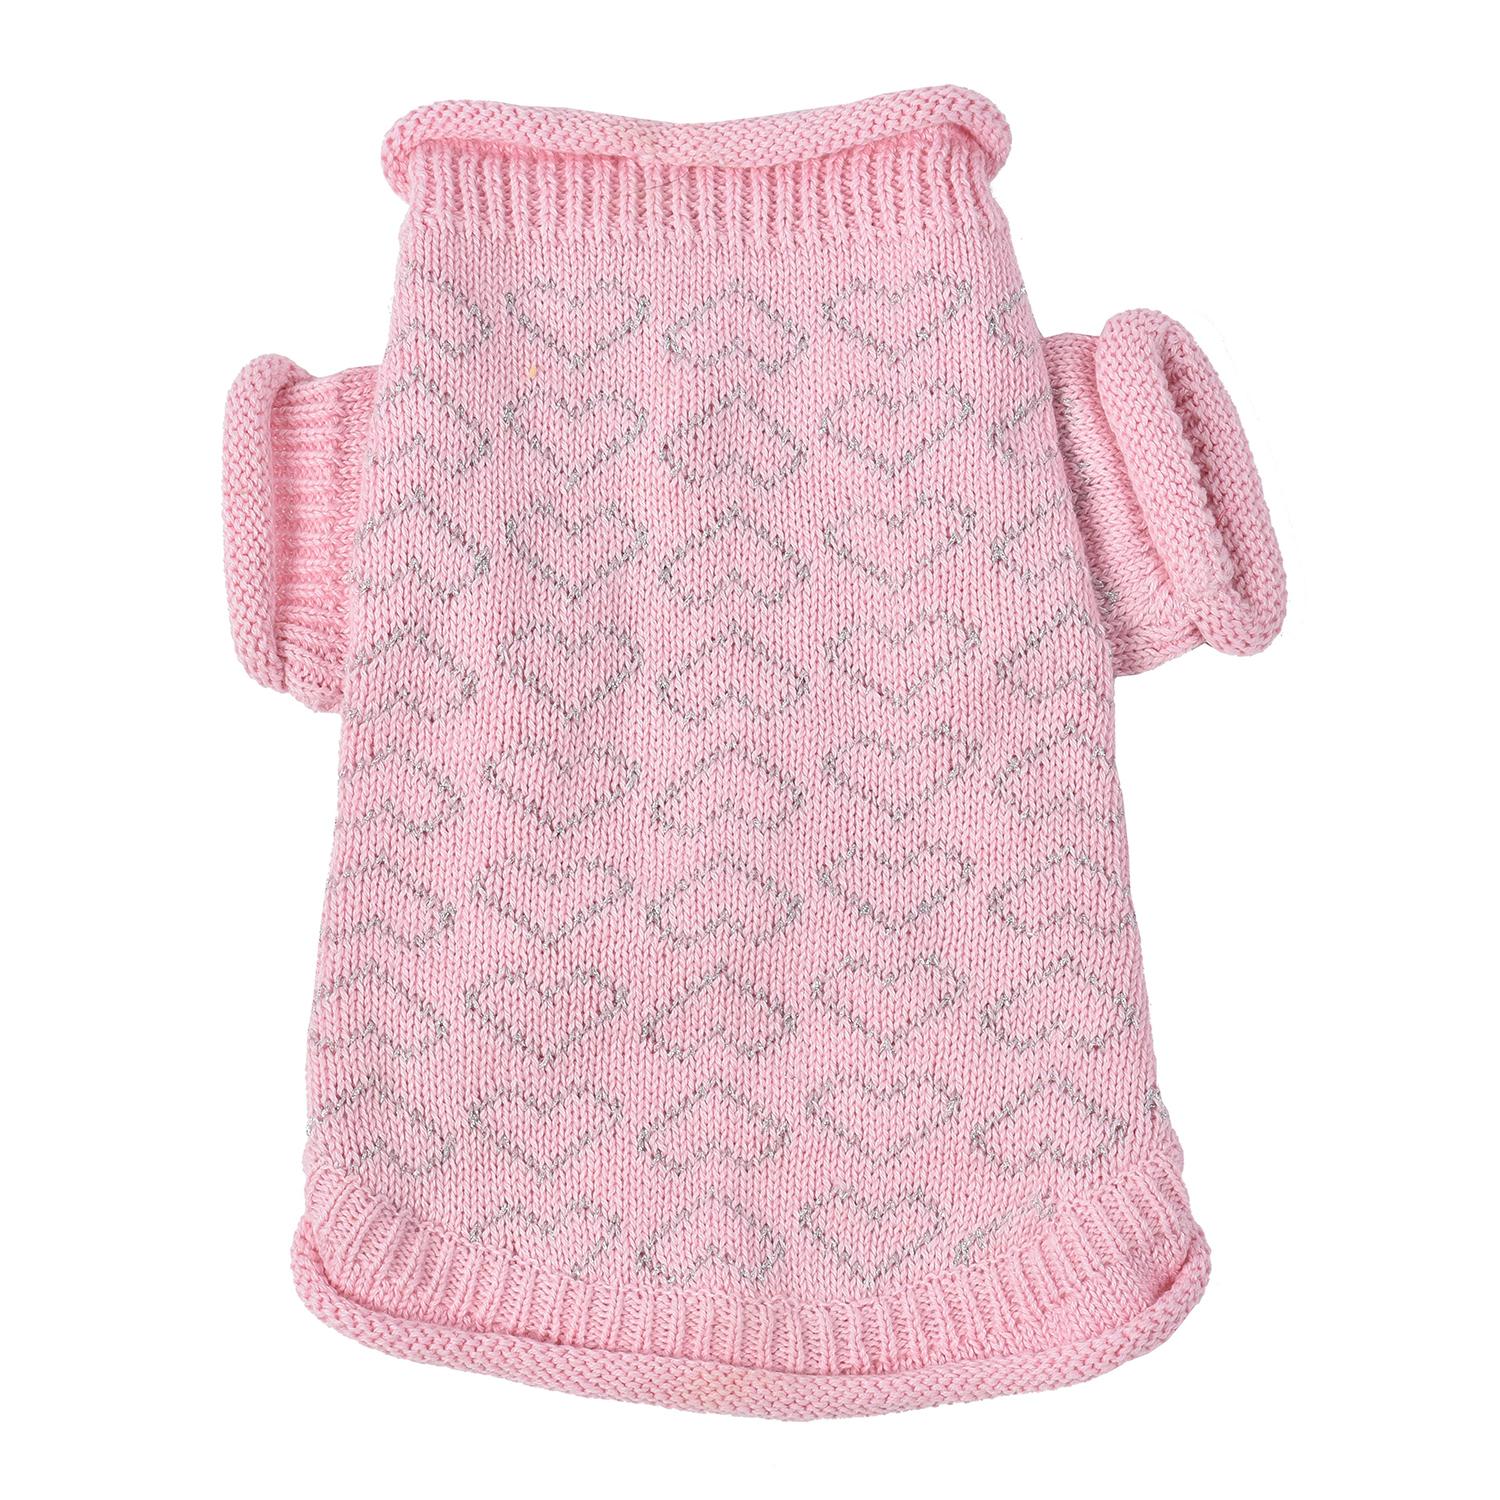 Oscar Newman Heart to Heart Dog Sweater - Pink